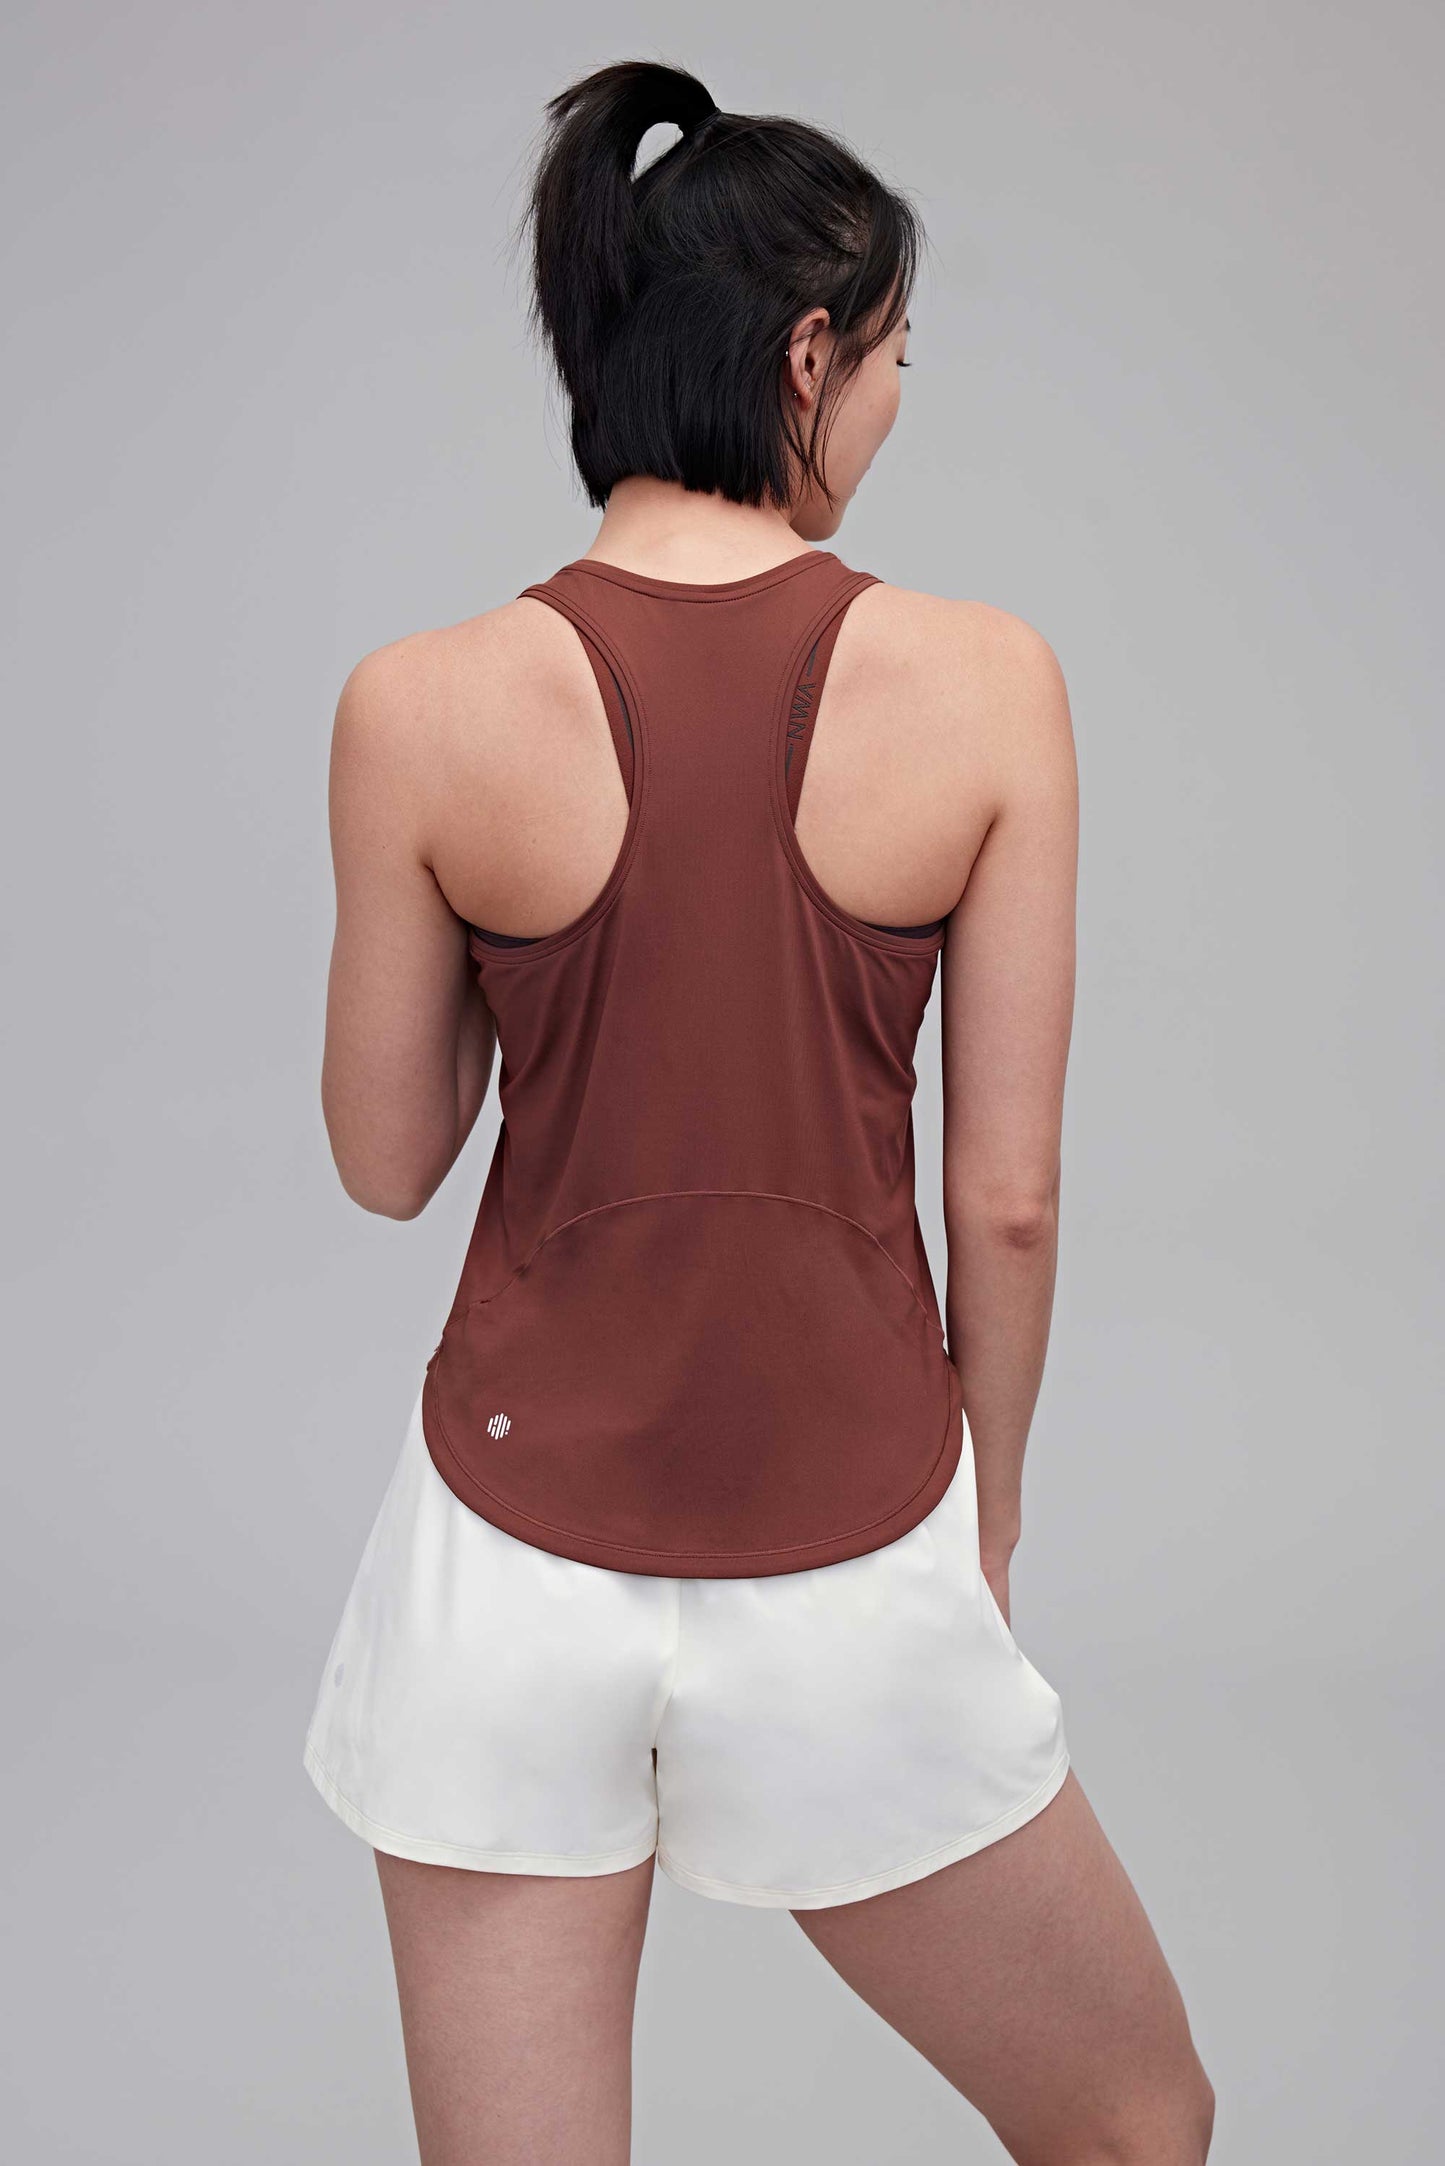 back of woman in reddish brown tank